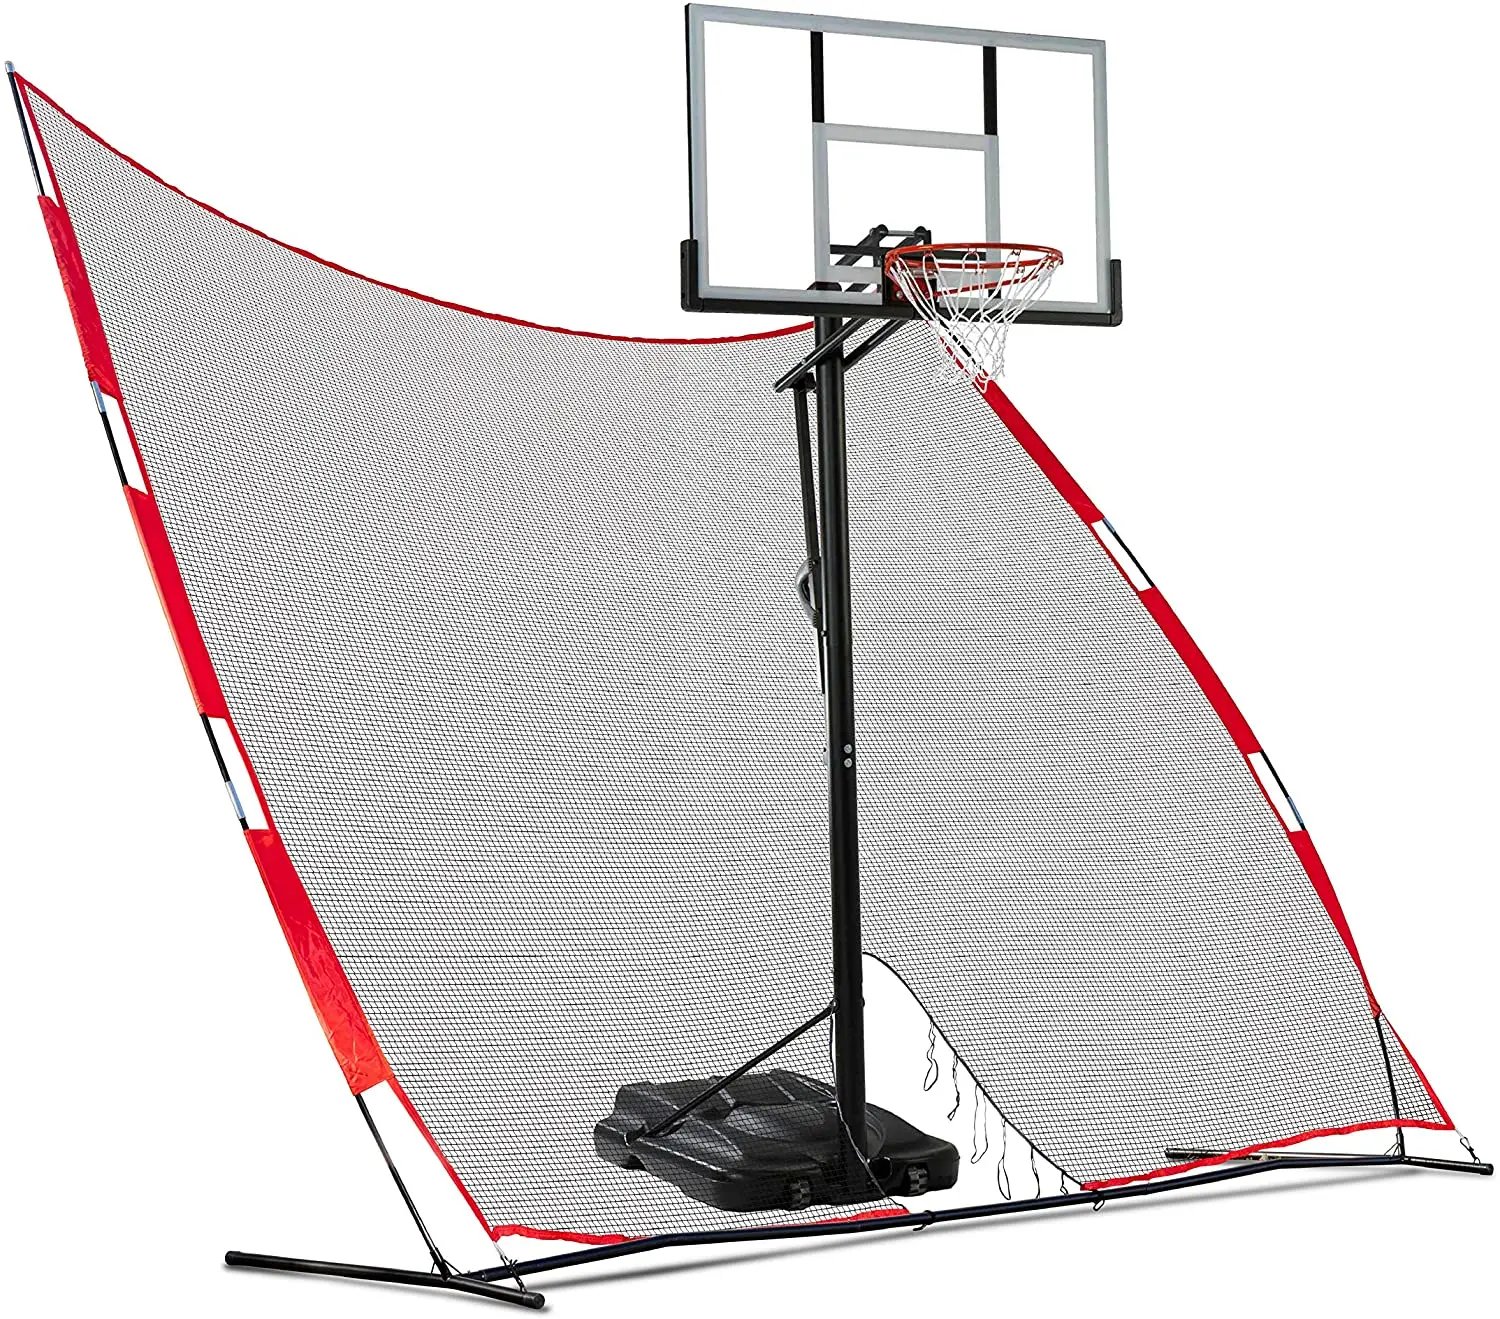 

BBN01A Cheap Price Basketball Return Netting and Rebounder, Basketball Backstop, Barrier Net, Customize color